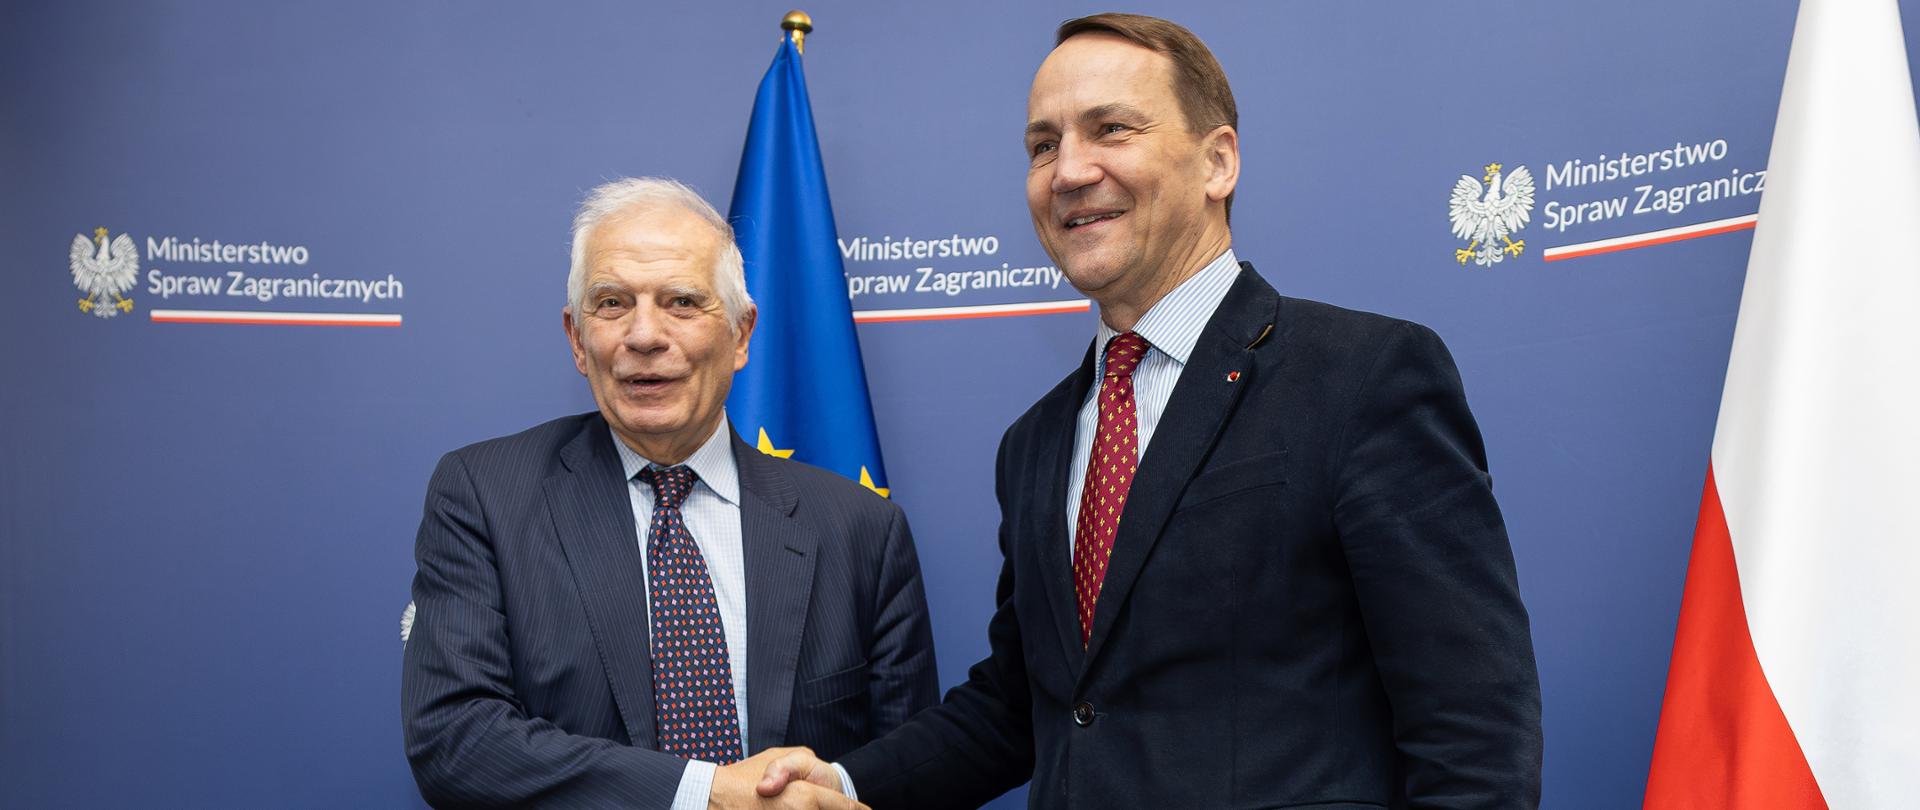 Minister Radosław Sikorski met with the EU High Representative Josep Borrell in Warsaw